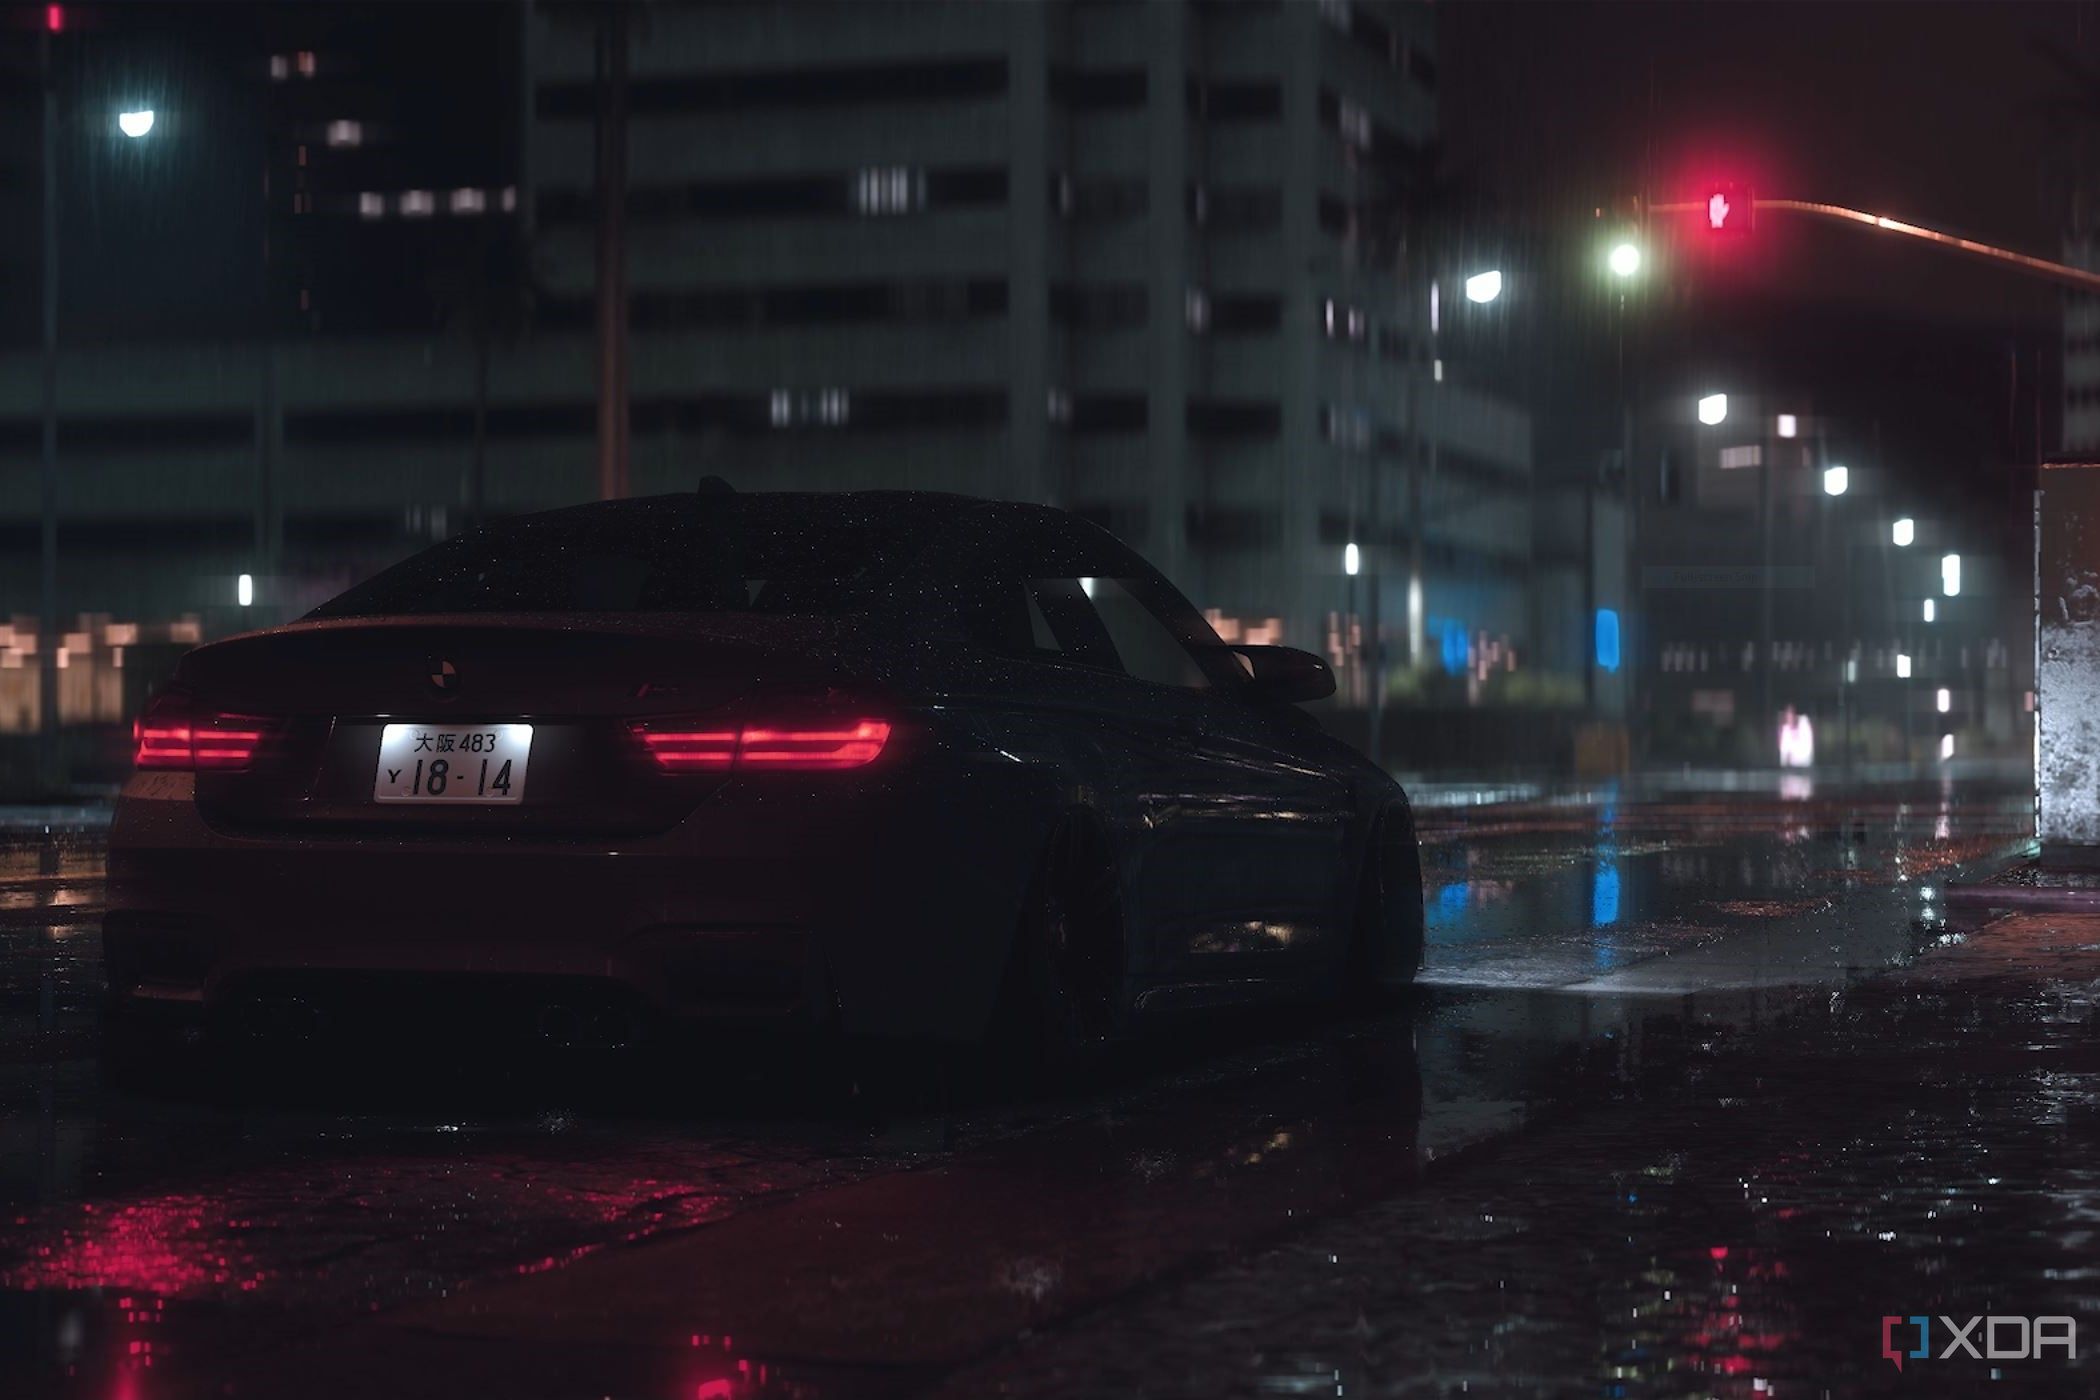 BMW M4 standing in rain